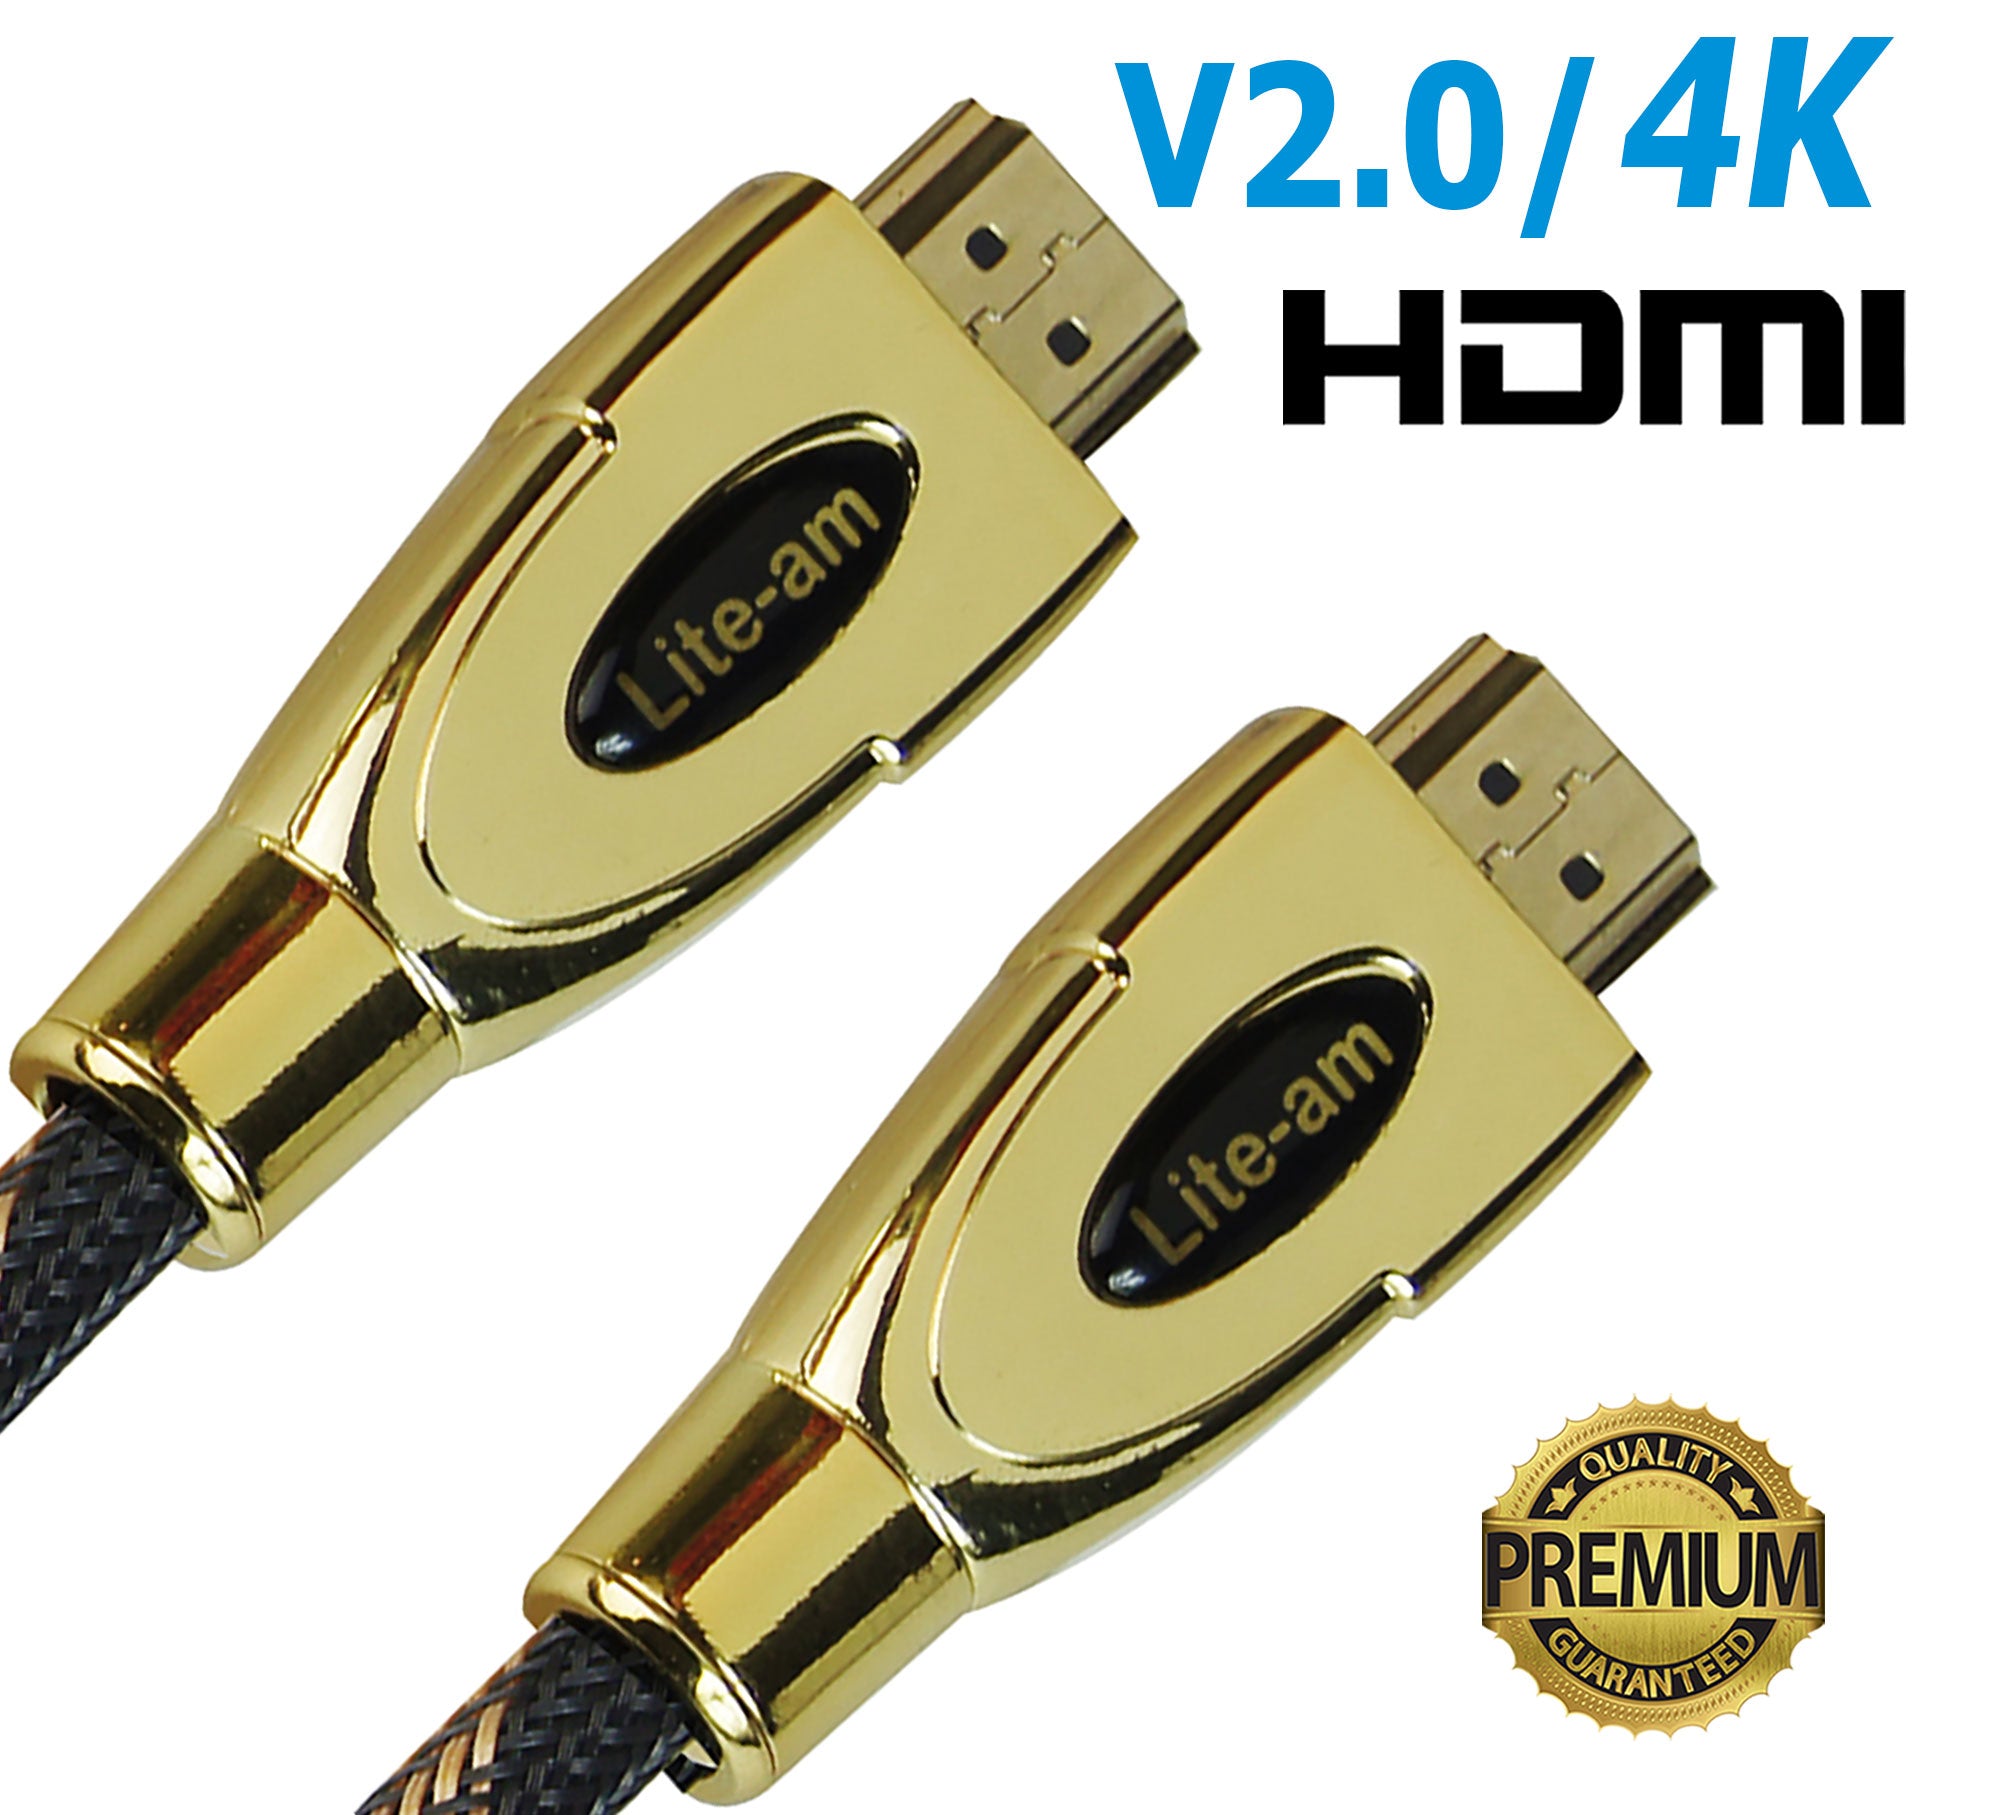 CABLE HDMI _15 METROS HDTV PREMIUM V2.0 ULTRA HD